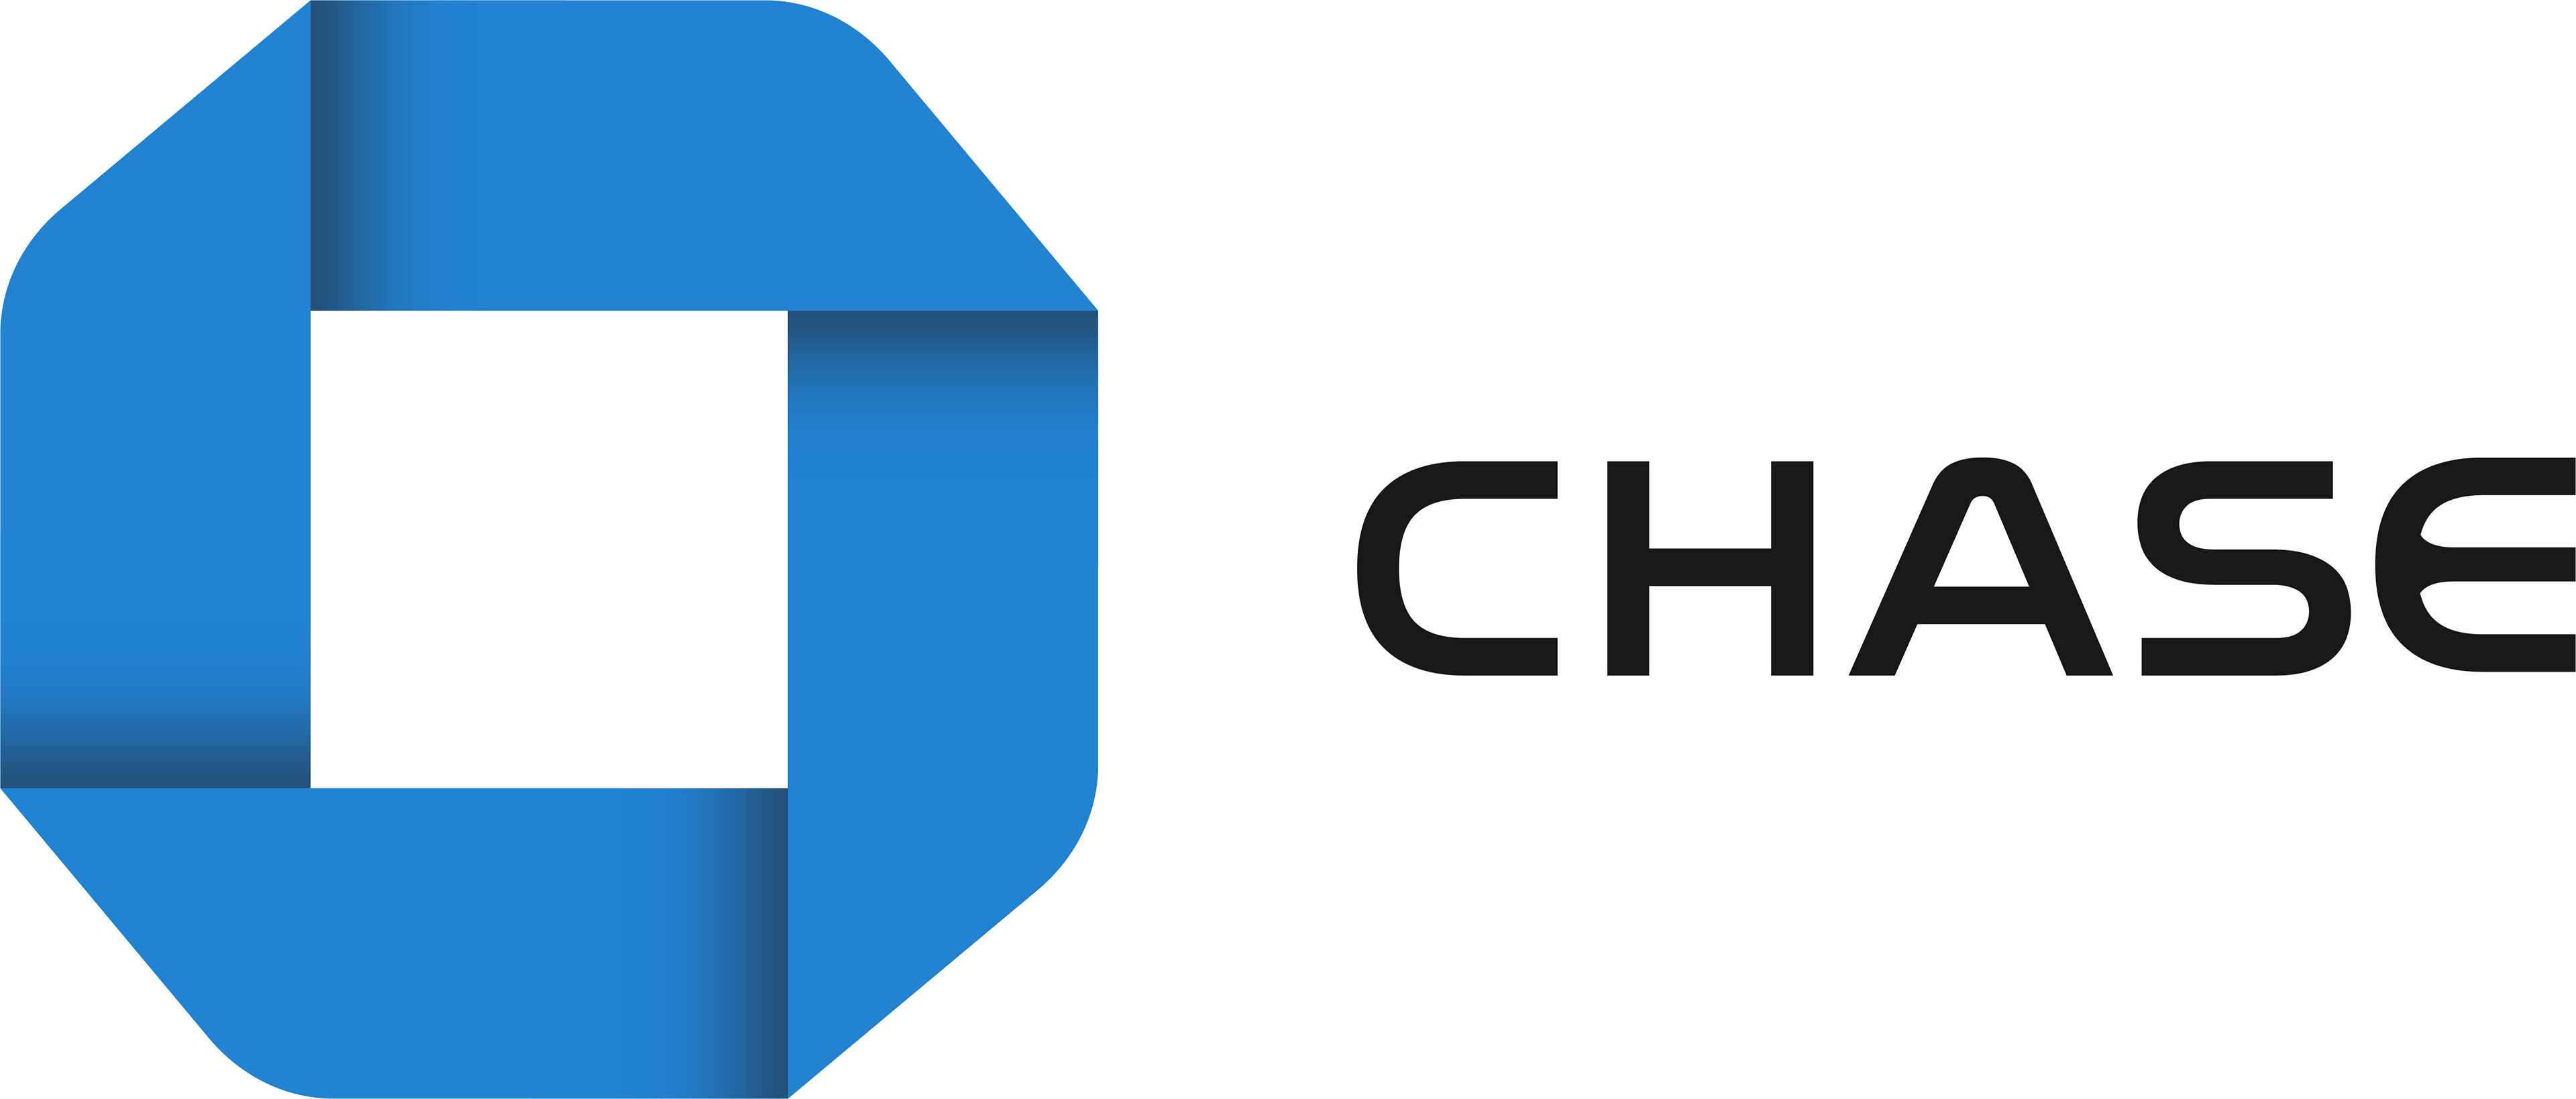 Current Chase Bank Logo - Proenza's Portfolio Bank Concept Logo